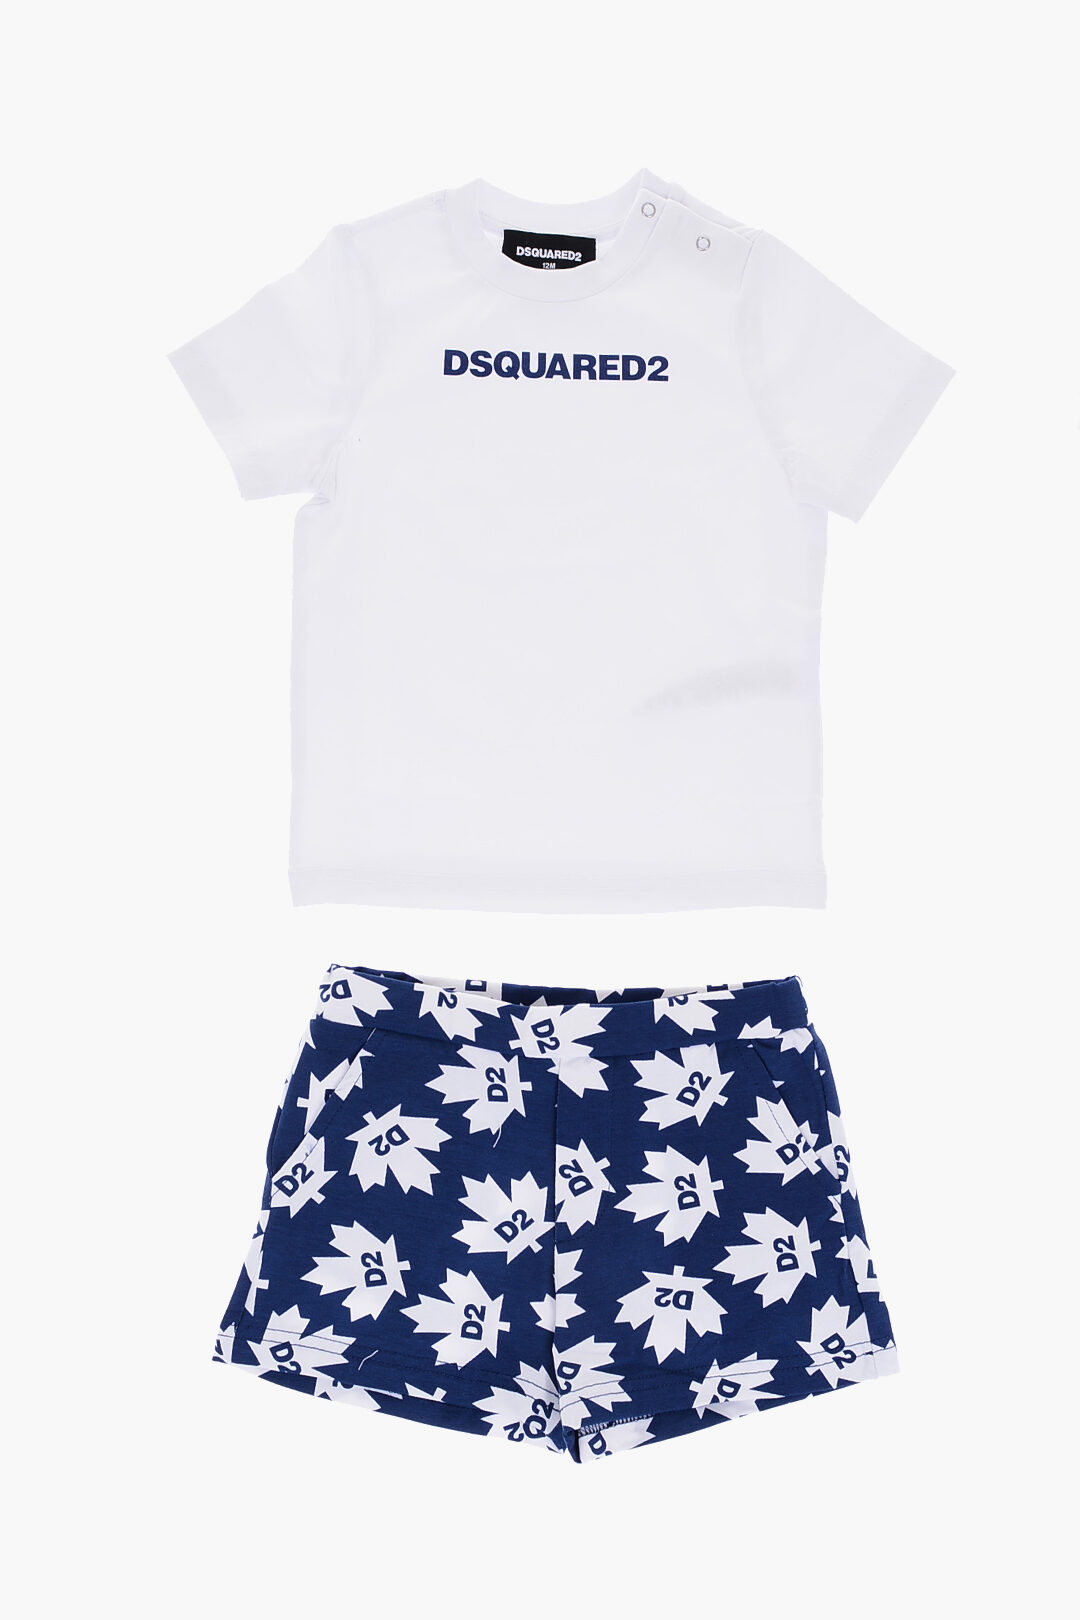 Dsquared2 Kids logo-print cotton T-shirt - White